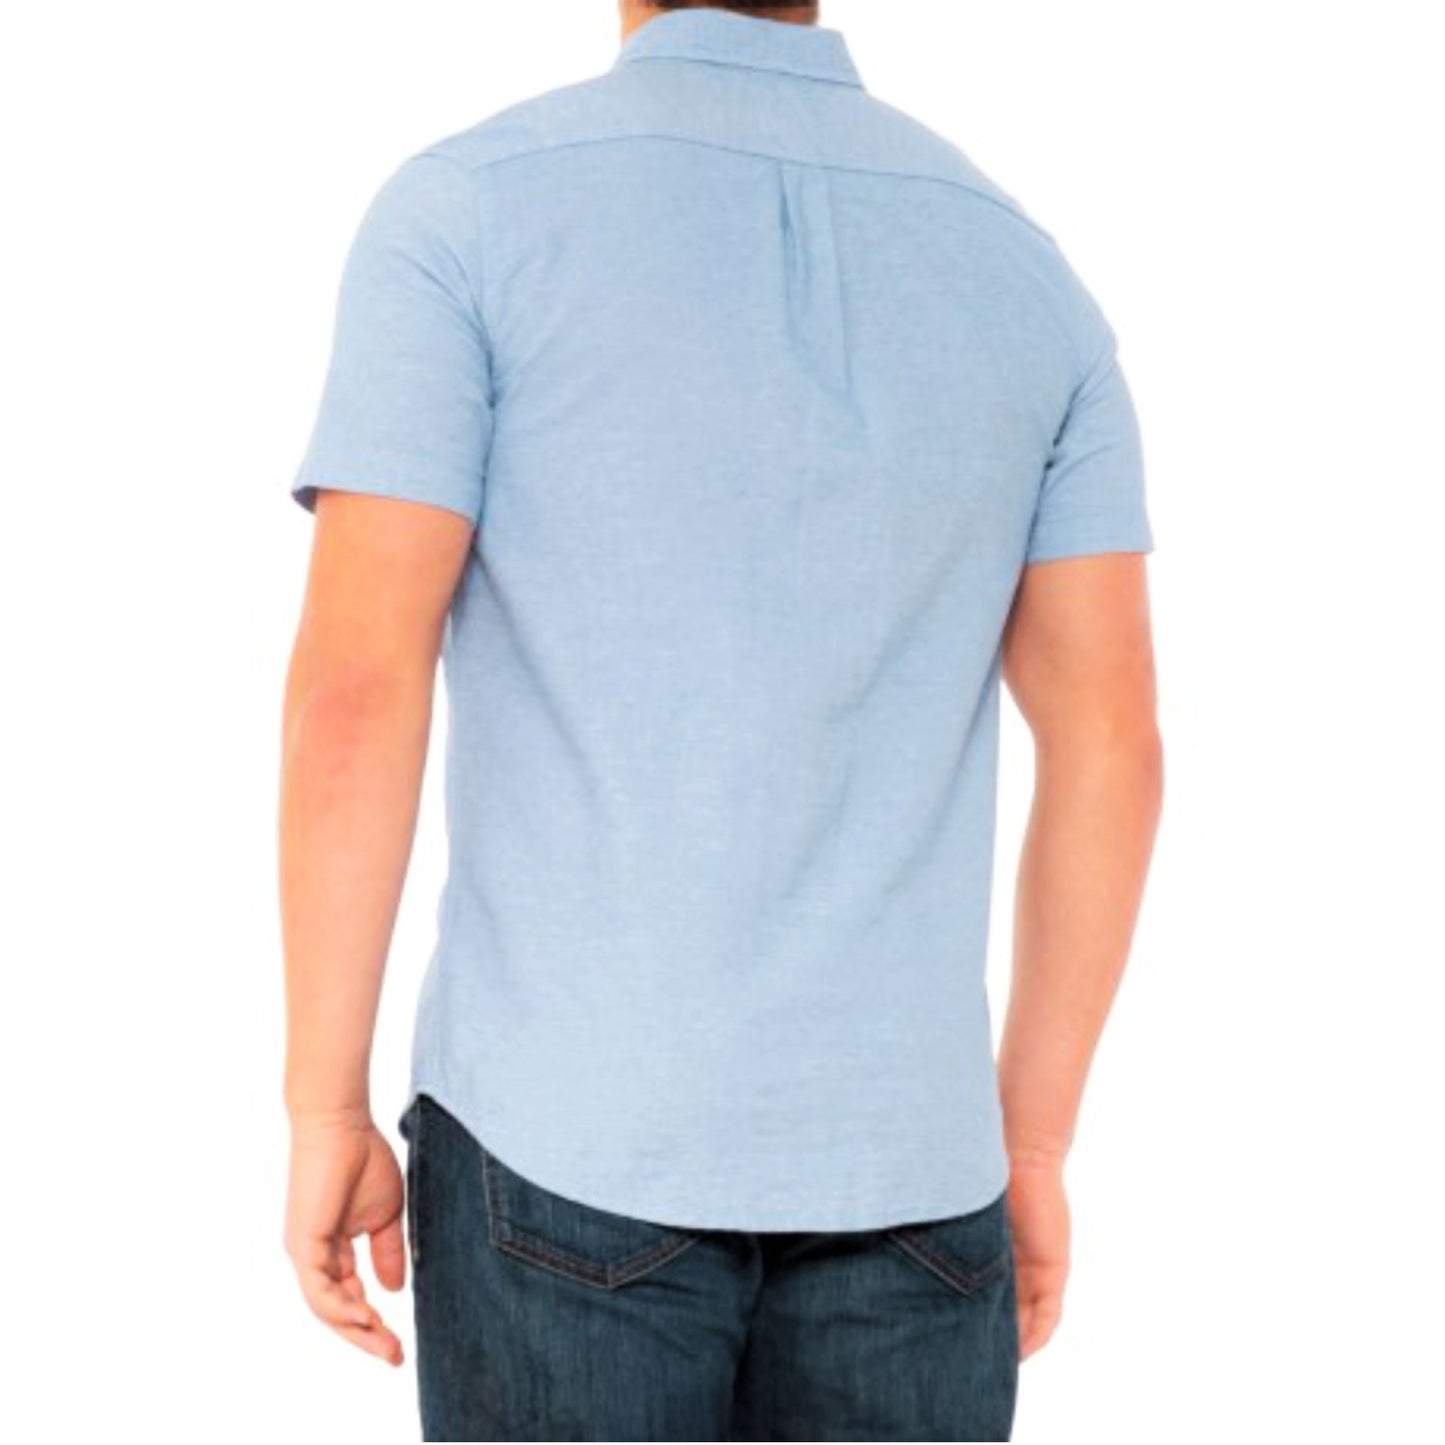 Levi's Rowney Cotton Casual Button-Down Short Sleeve Shirt